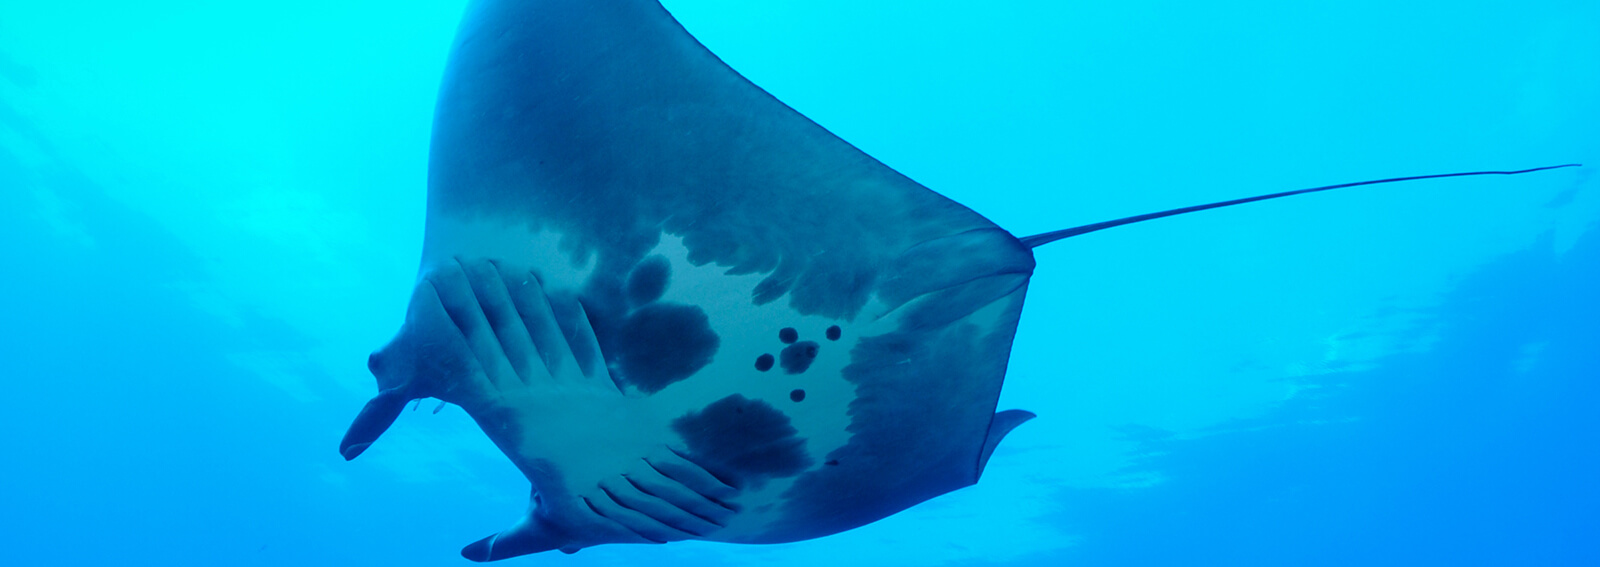 A manta ray seen from below